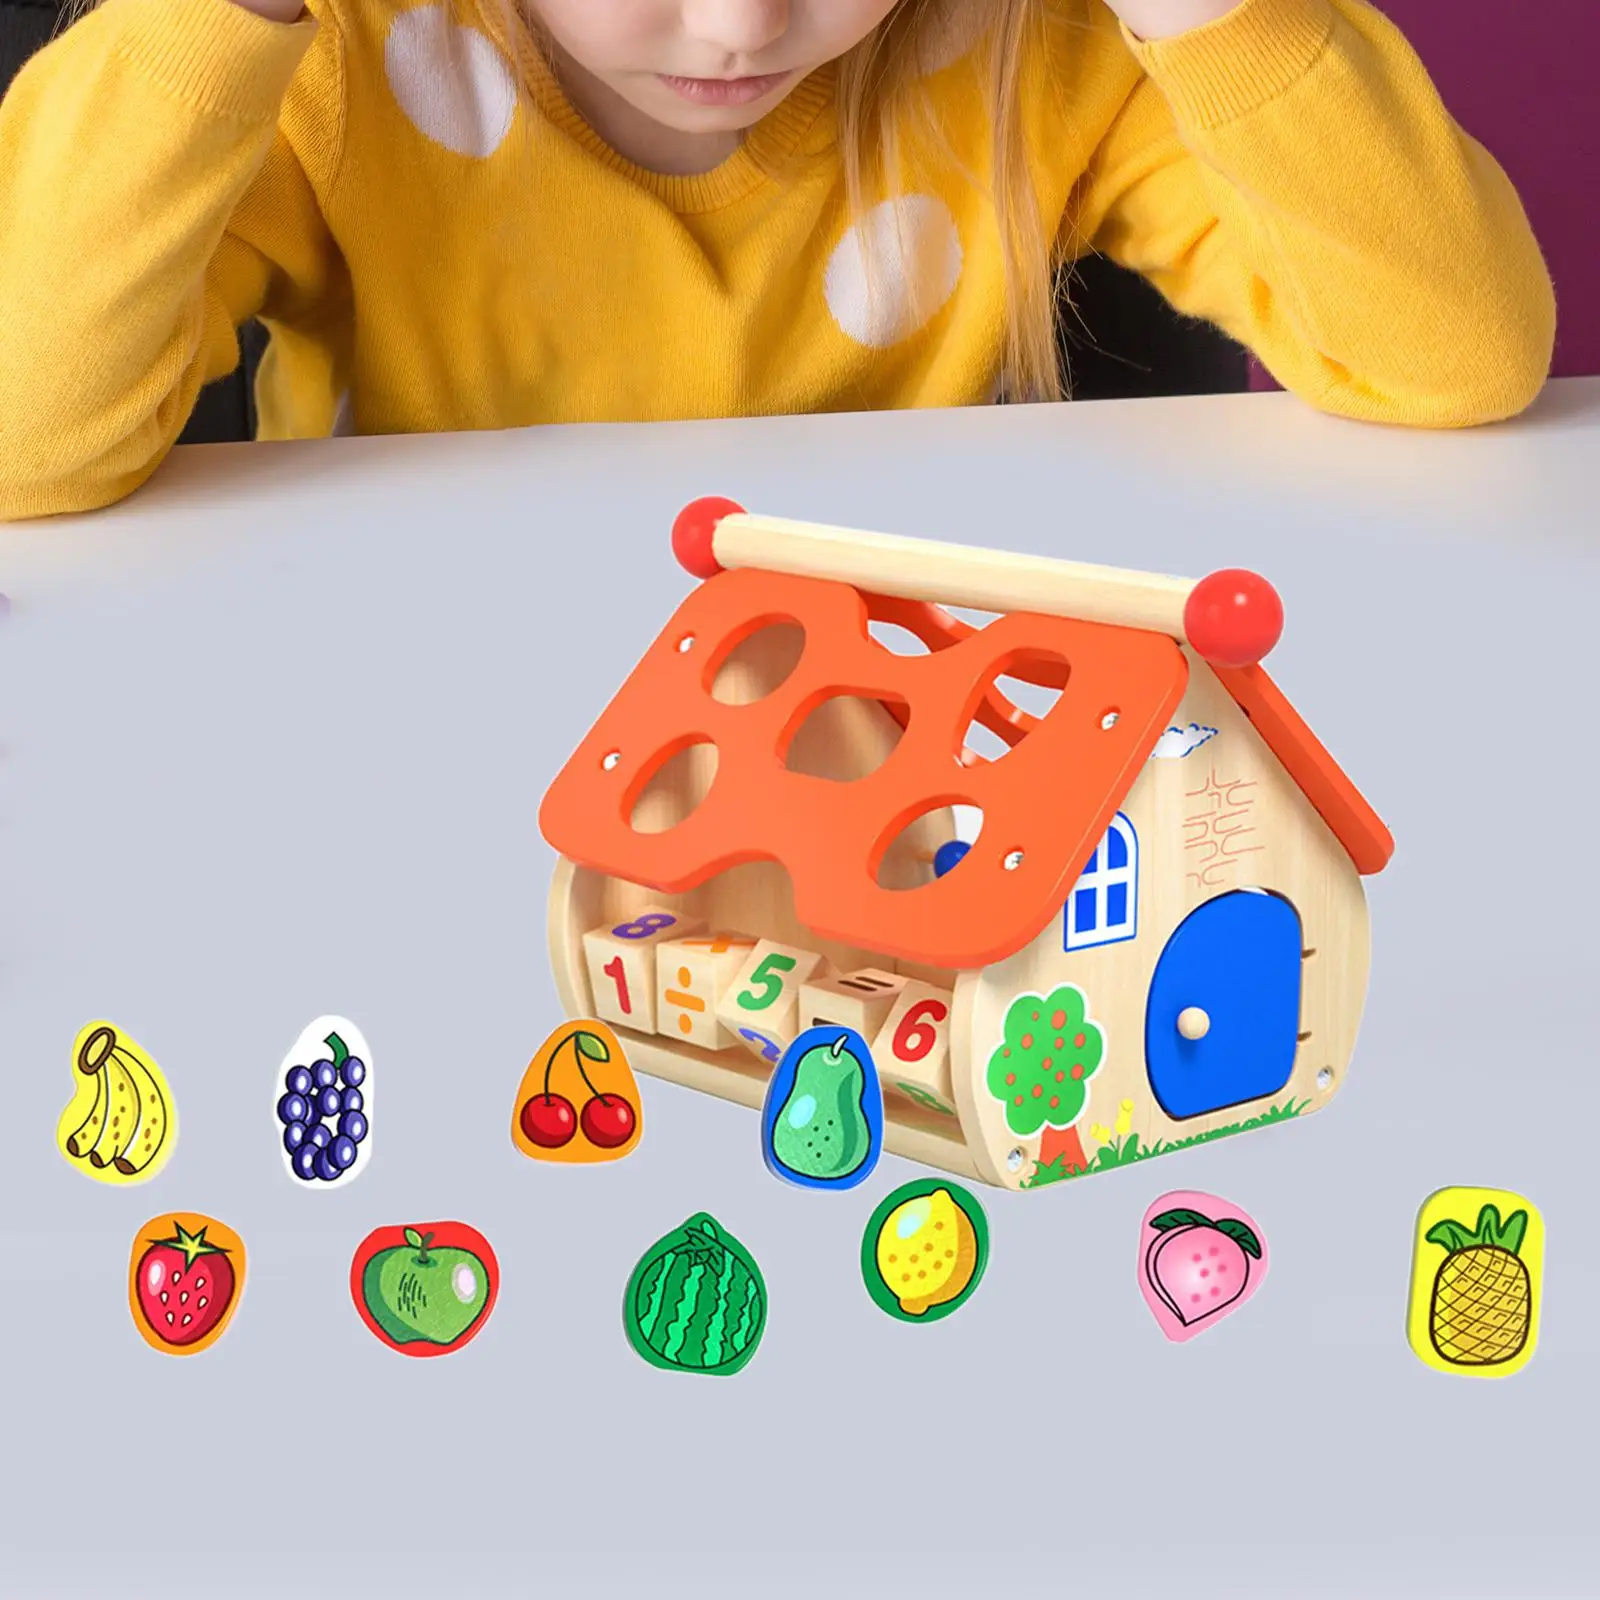 

Wooden Activity Cube Sensory Toy Preschool Developmental Montessori Preschool Toys for Children Age 3 4 5 6 7 8 Kids Boys Gifts